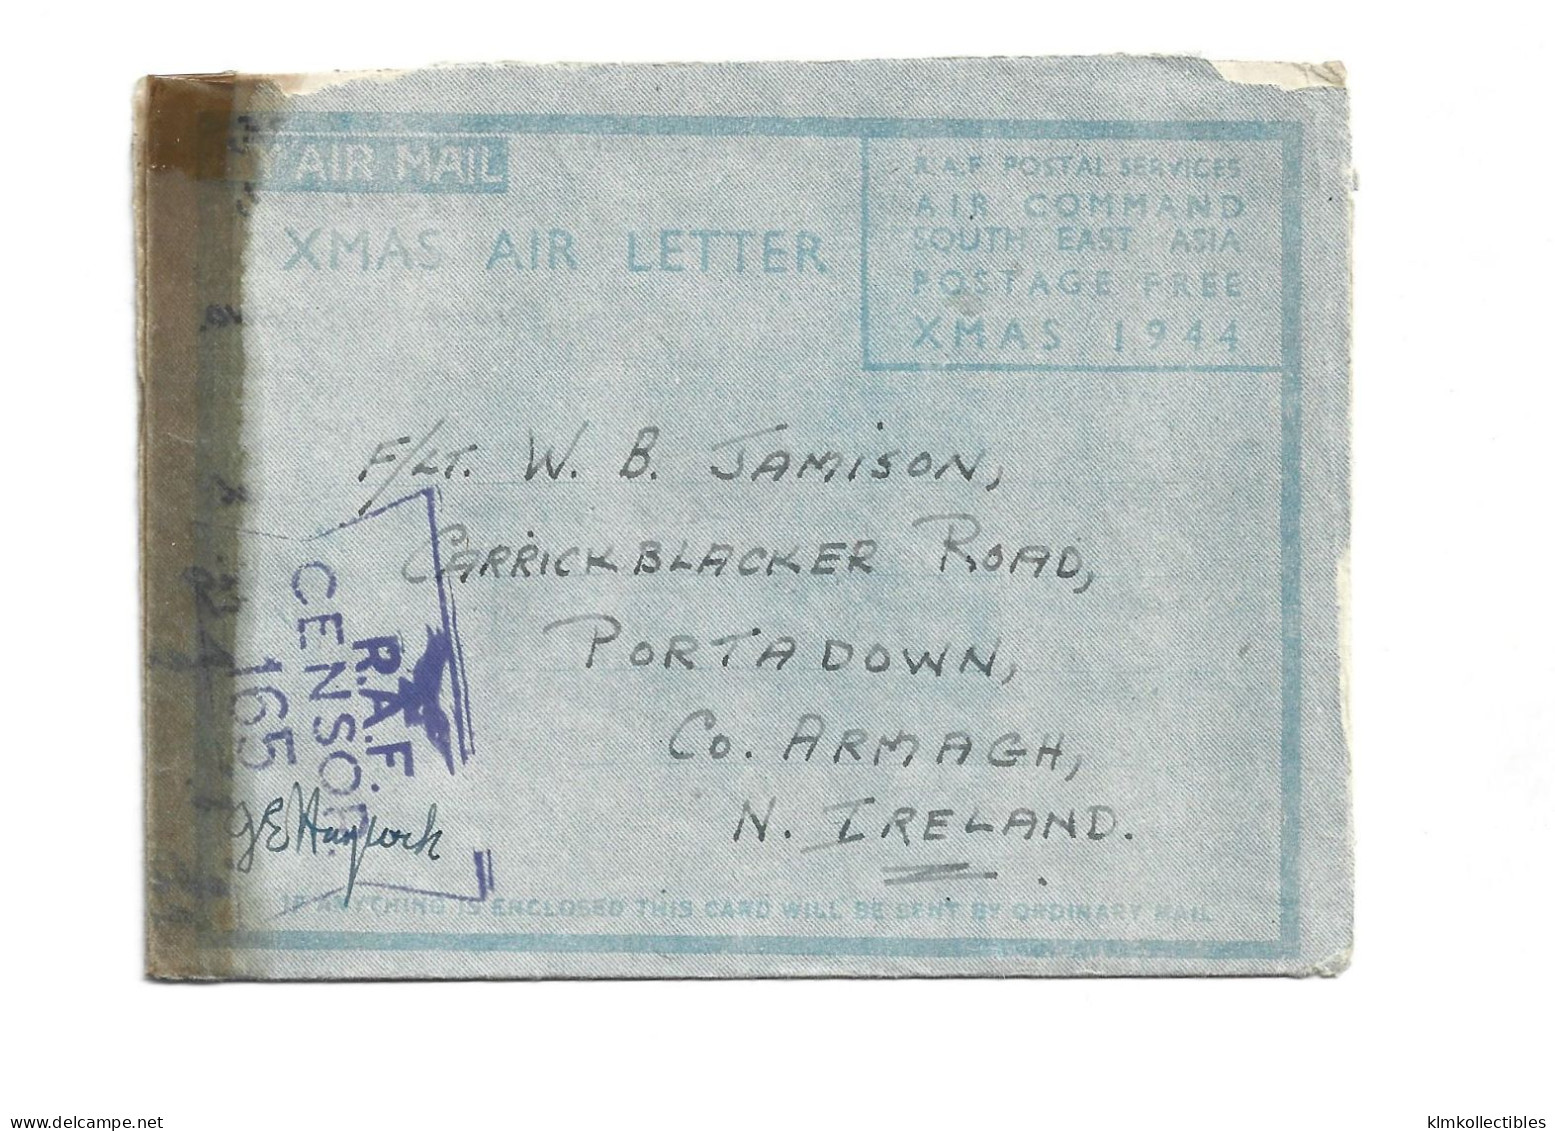 GREAT BRITAIN UNITED KINGDOM ENGLAND COLONIES - INDIA - 1944 CHRISTMAS RAF AIRMAIL AEROGRAMME - CENSORED RARE - 1936-47 King George VI